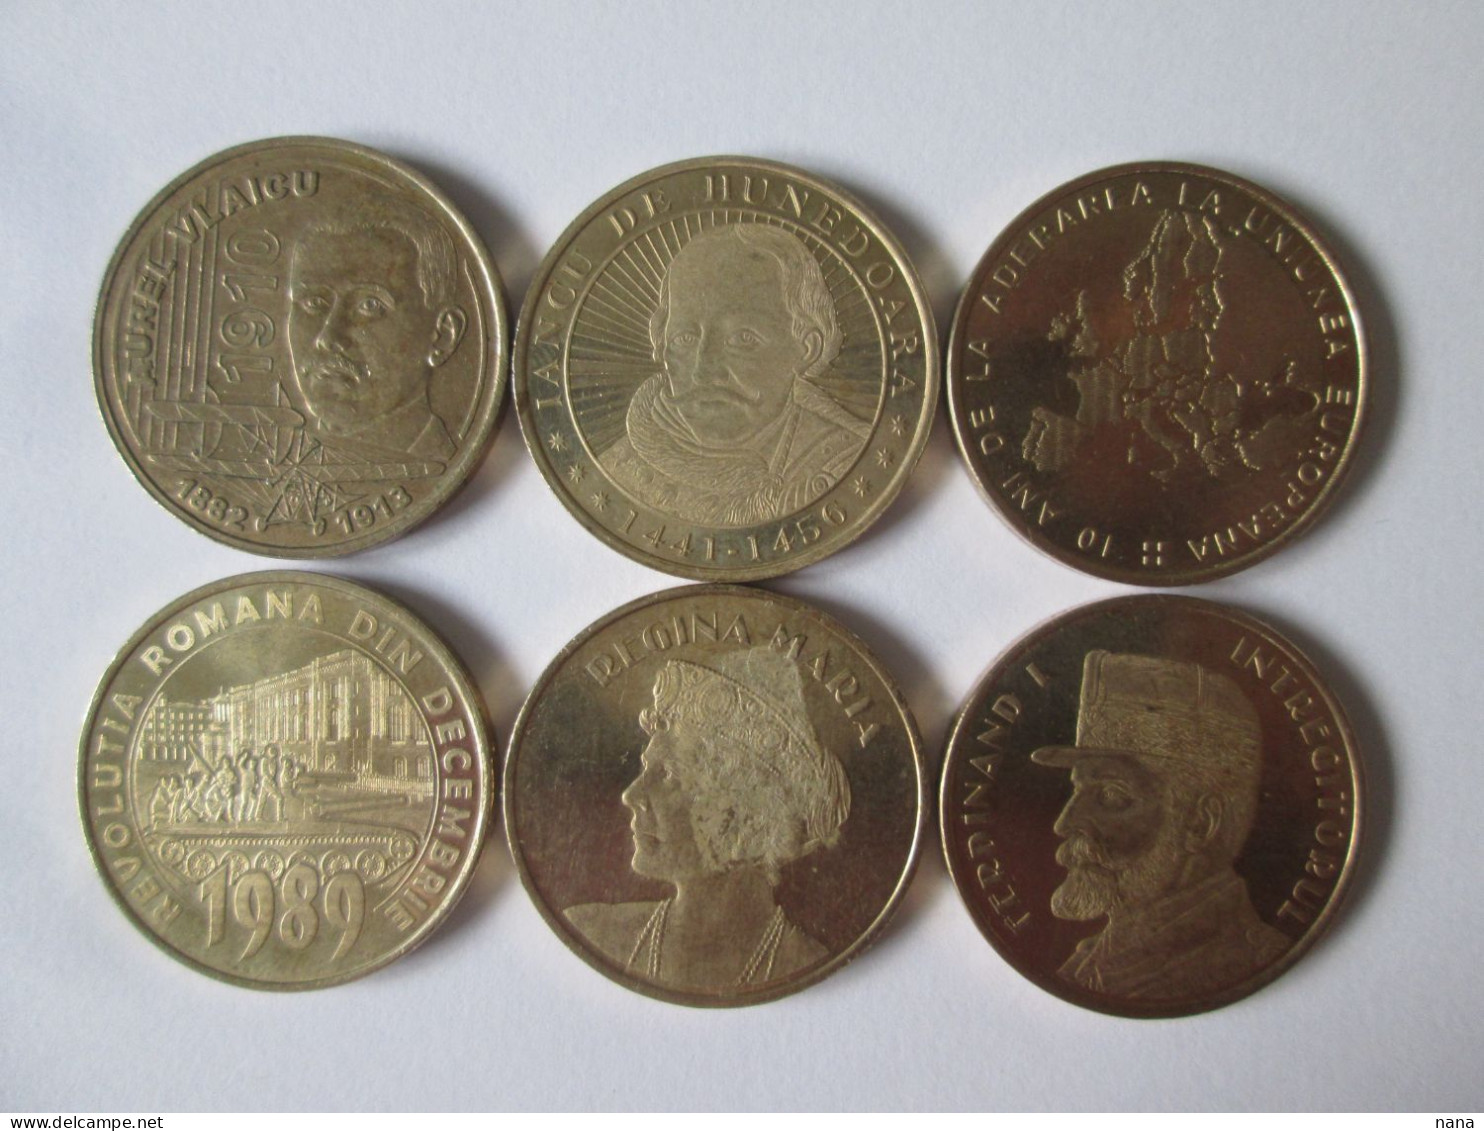 Roumanie Lot De 6 Pieces Commem.differentes 50 Bani /Romania Set Of 6 Different Commemorative Coins 50 Bani - Rumania